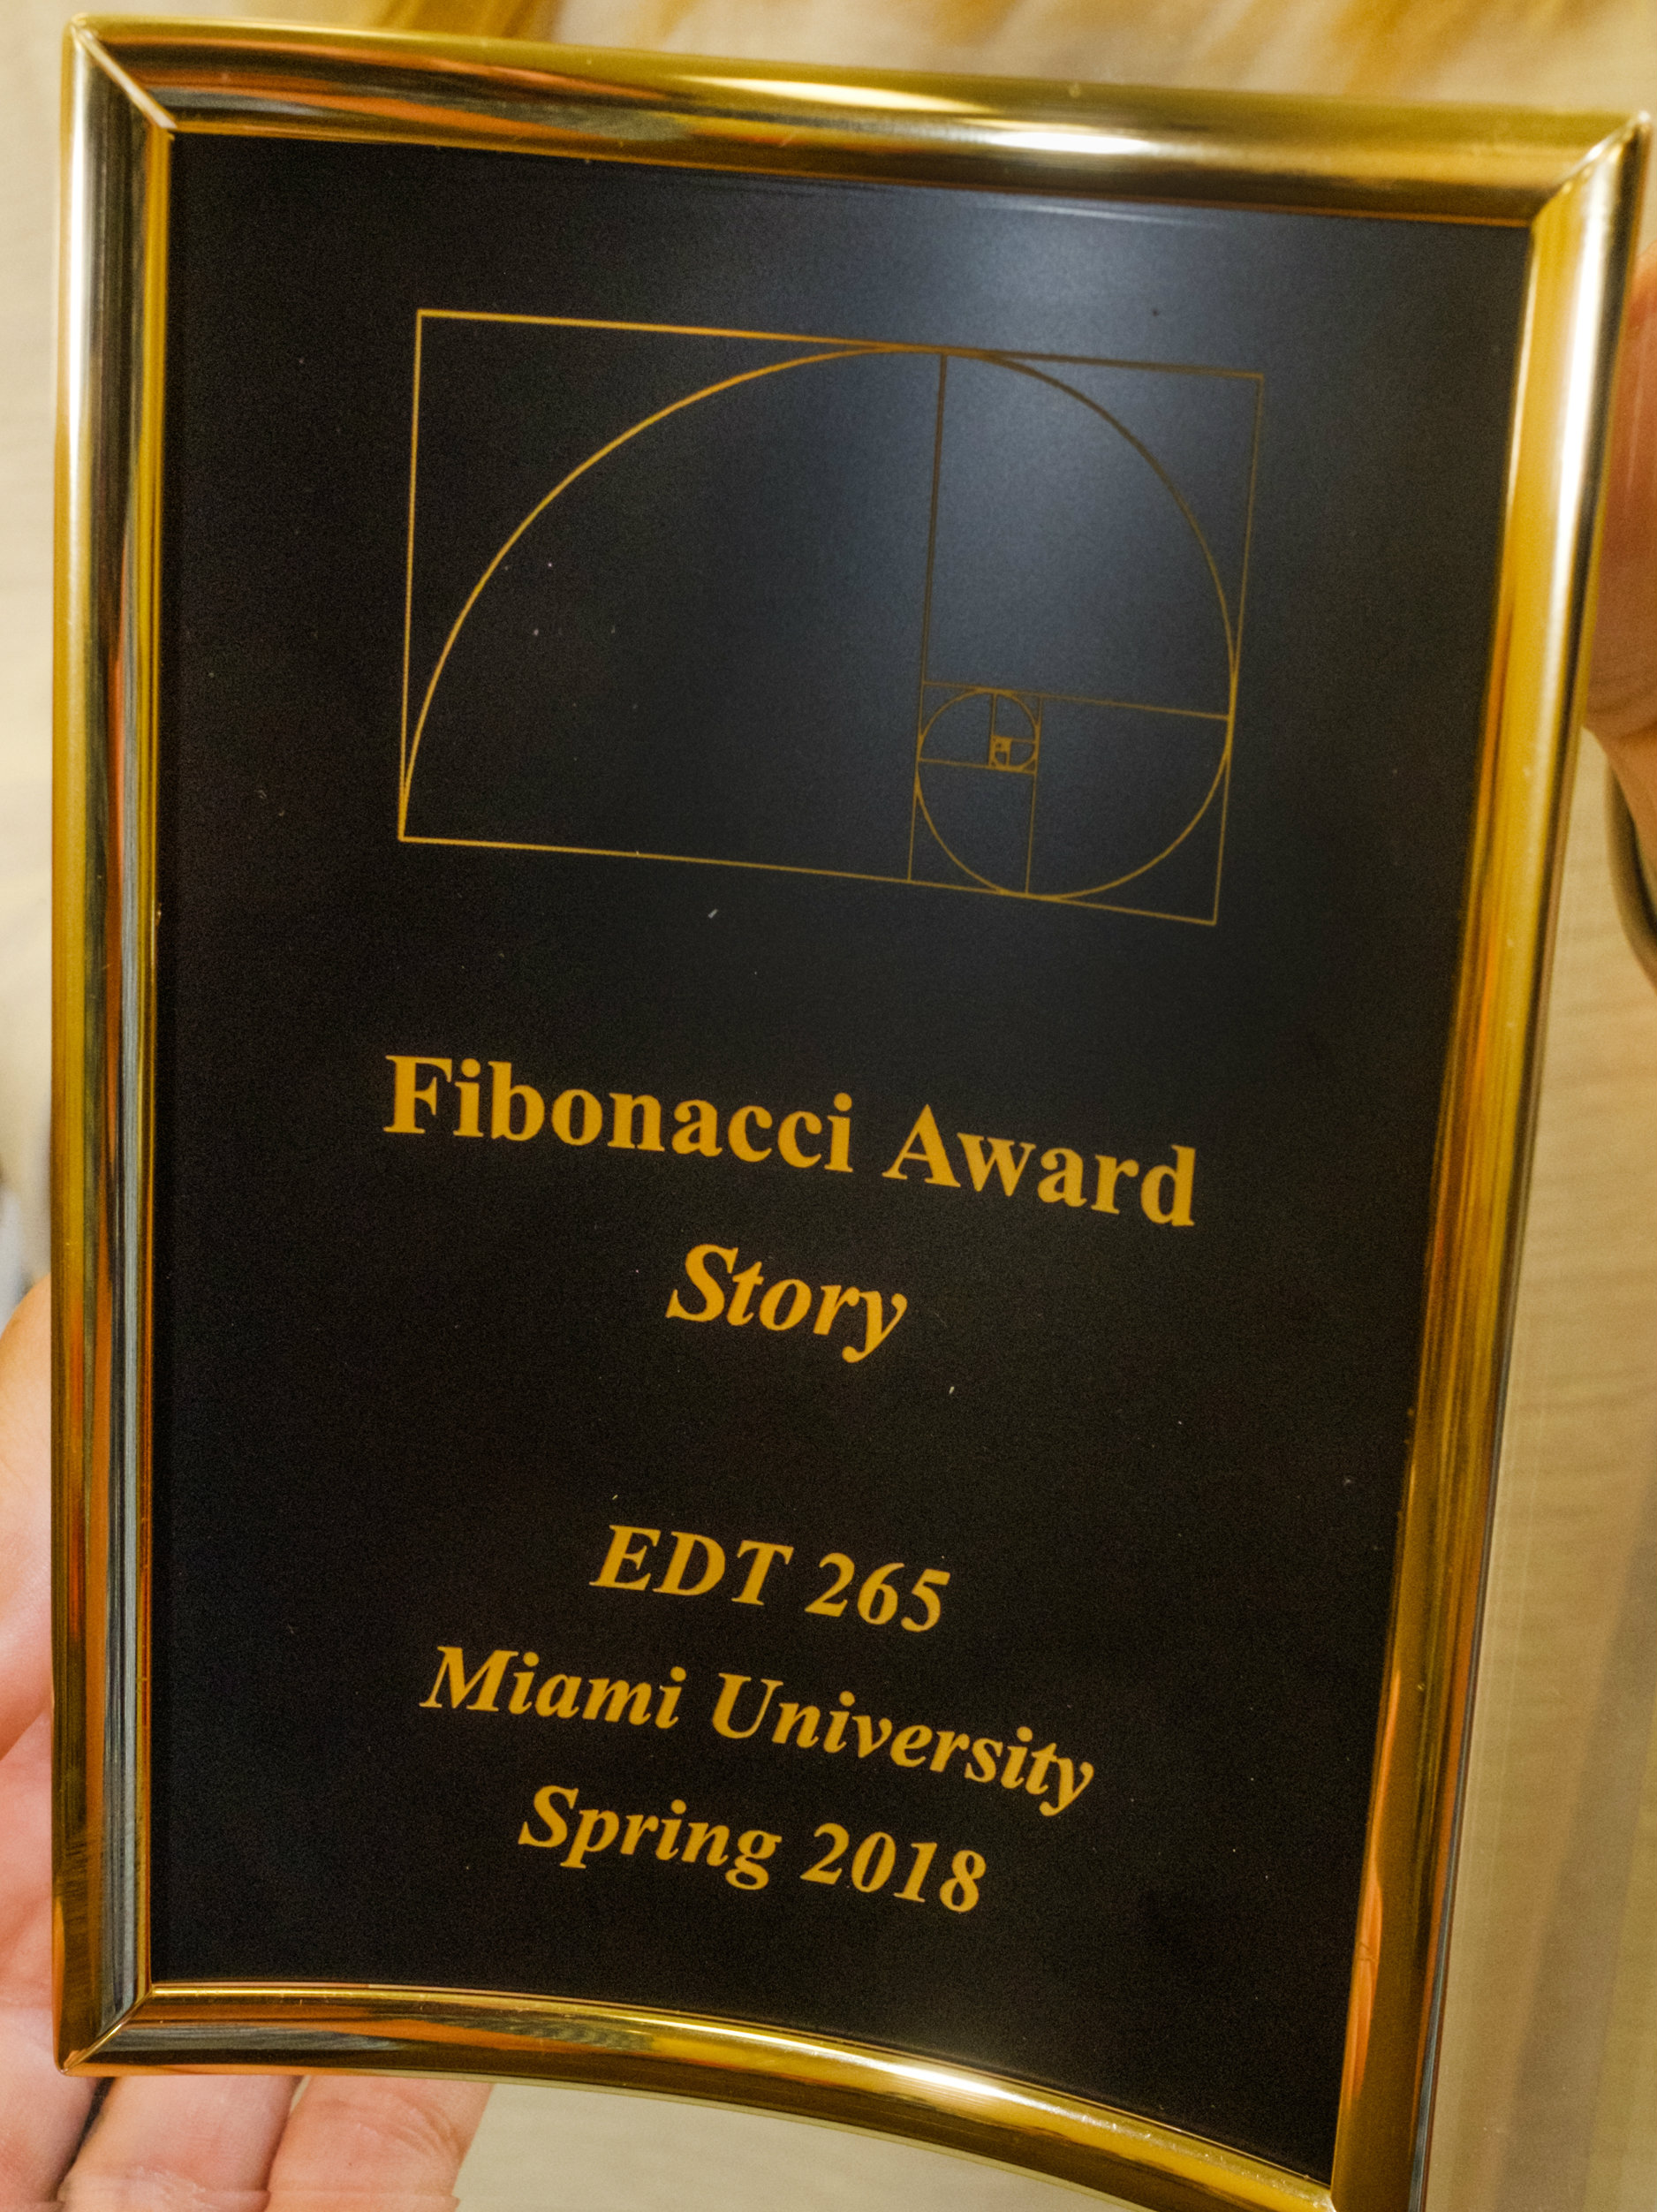 fibonacci award story, edt 265, Miami University, Spring 2018